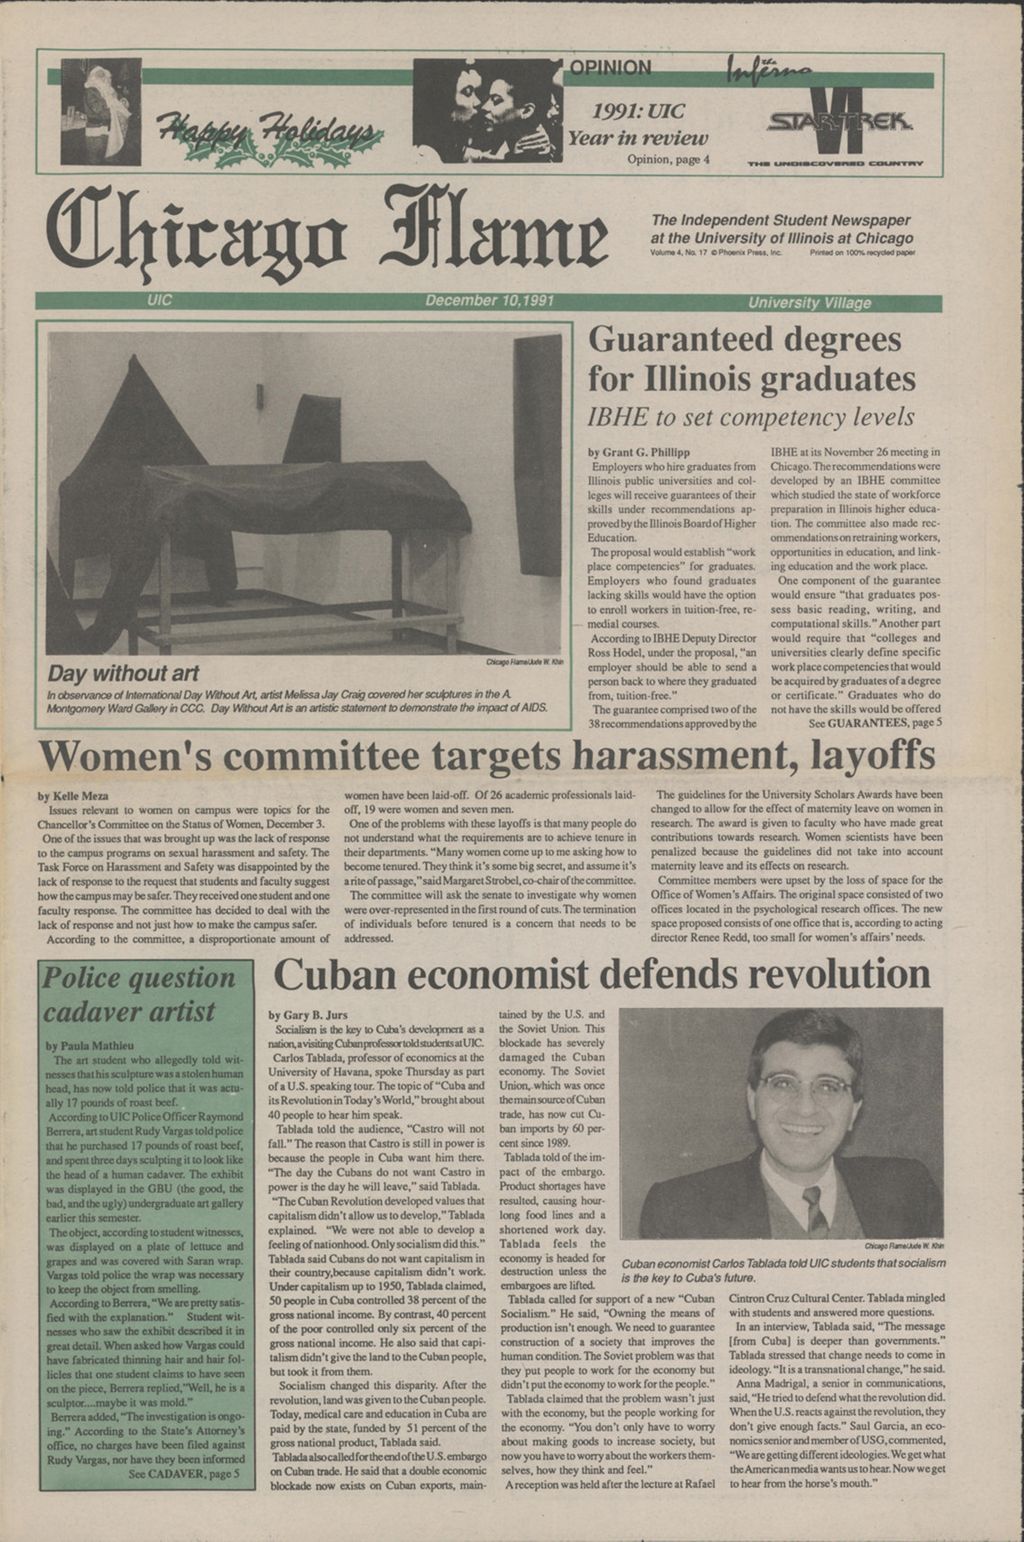 Chicago Flame (December 10, 1991)